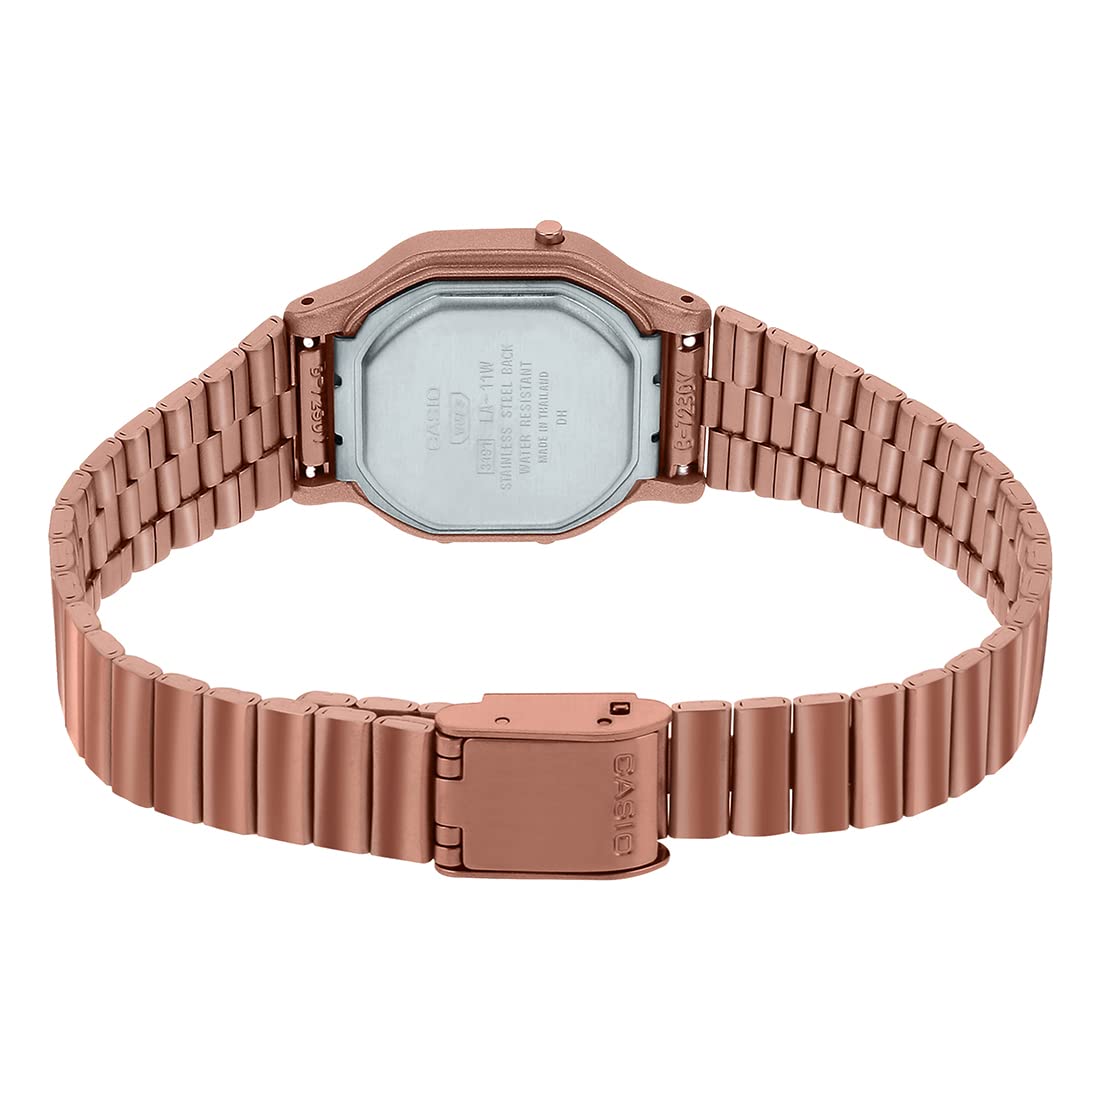 Casio Digital Watch for Women's | Watches & Accessories | Halabh.com